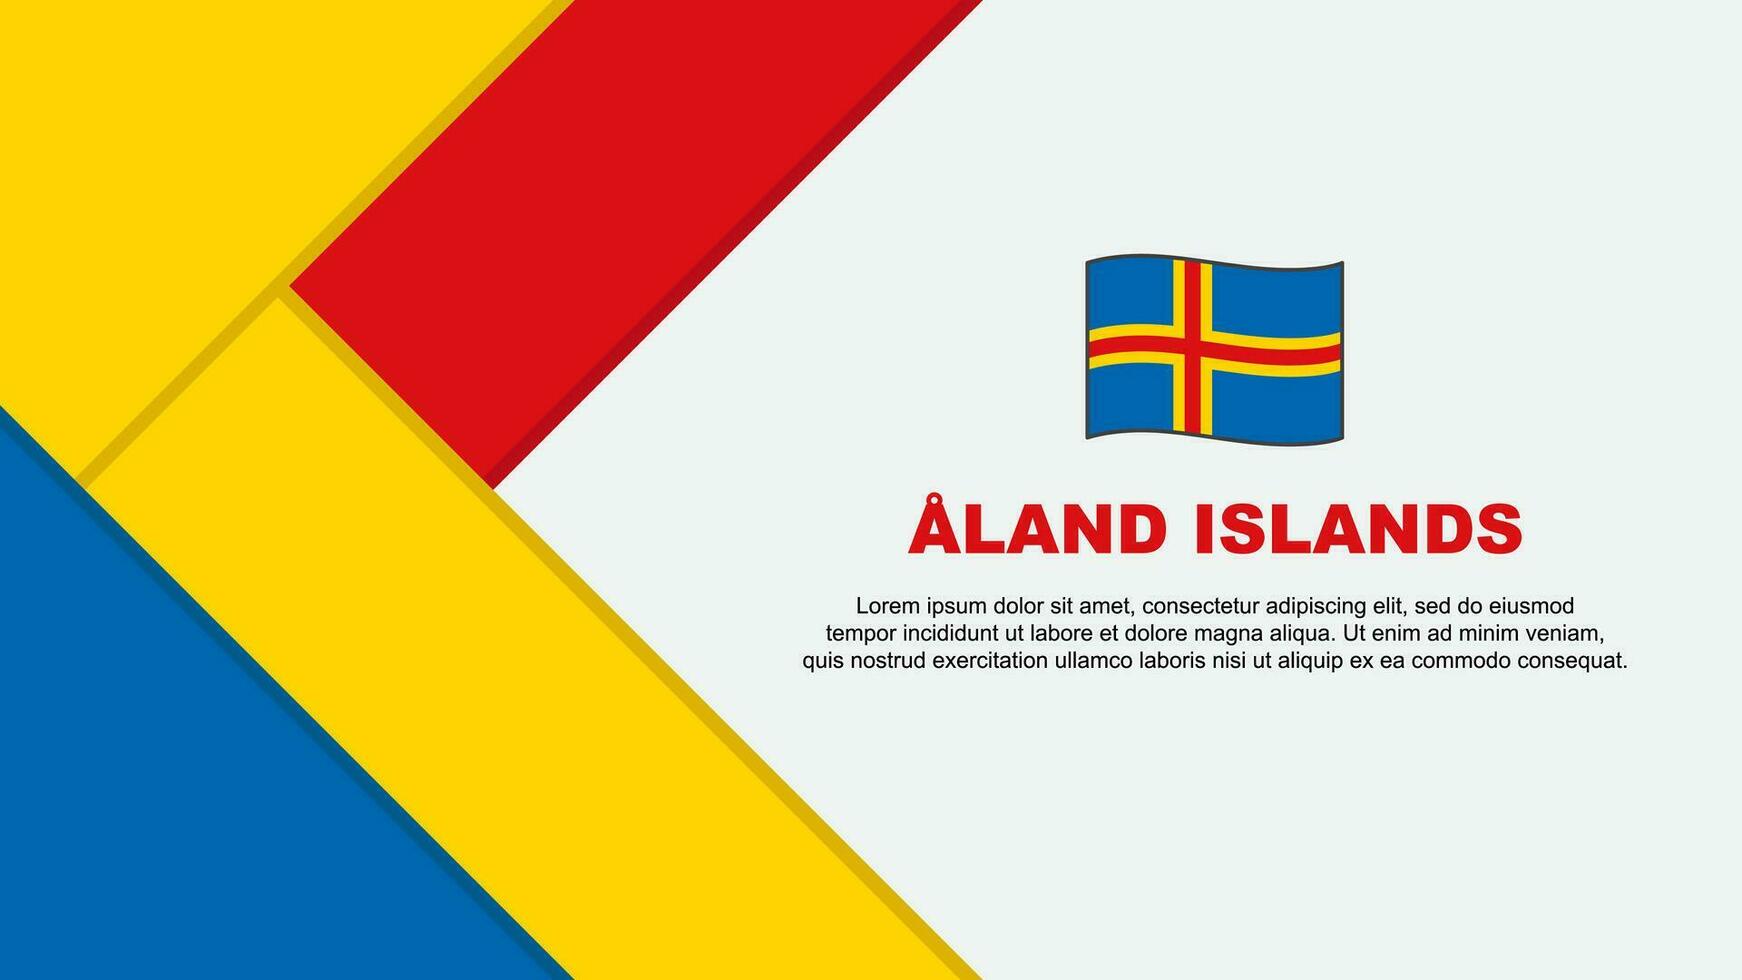 Aland Islands Flag Abstract Background Design Template. Aland Islands Independence Day Banner Cartoon Vector Illustration. Aland Islands Illustration